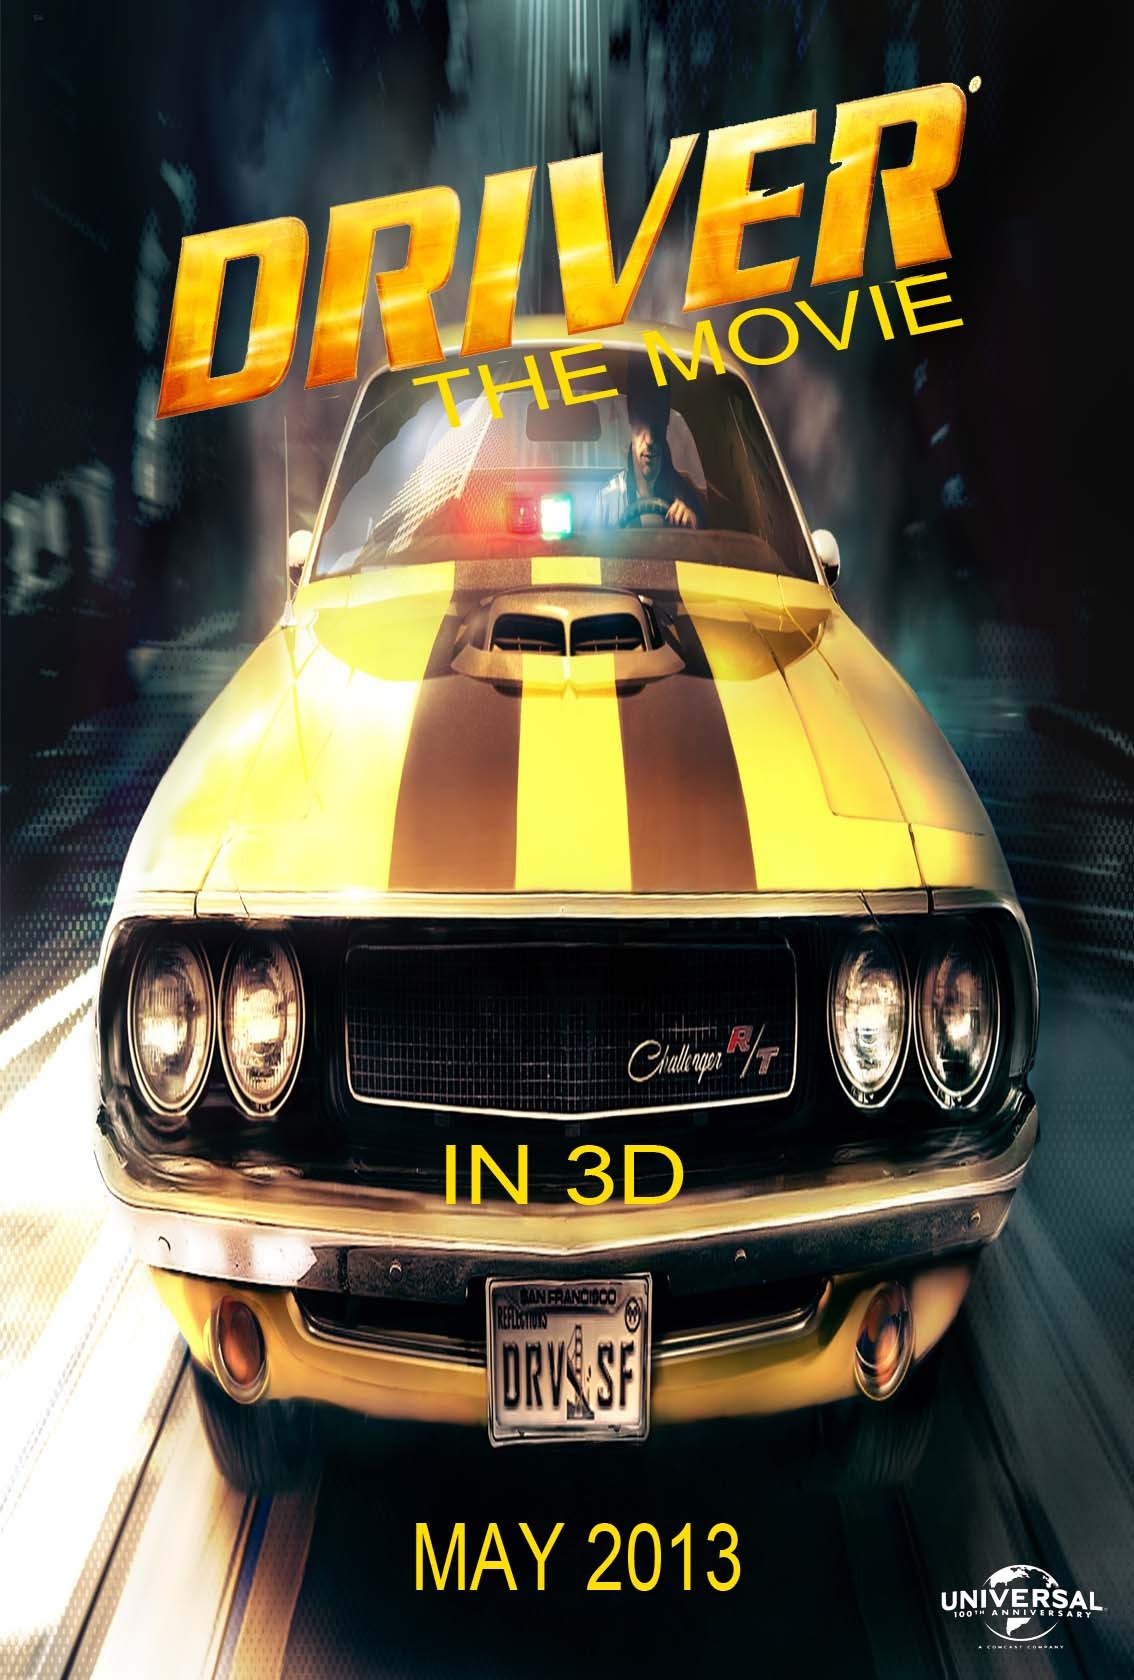 DRIVER The Movie box cover